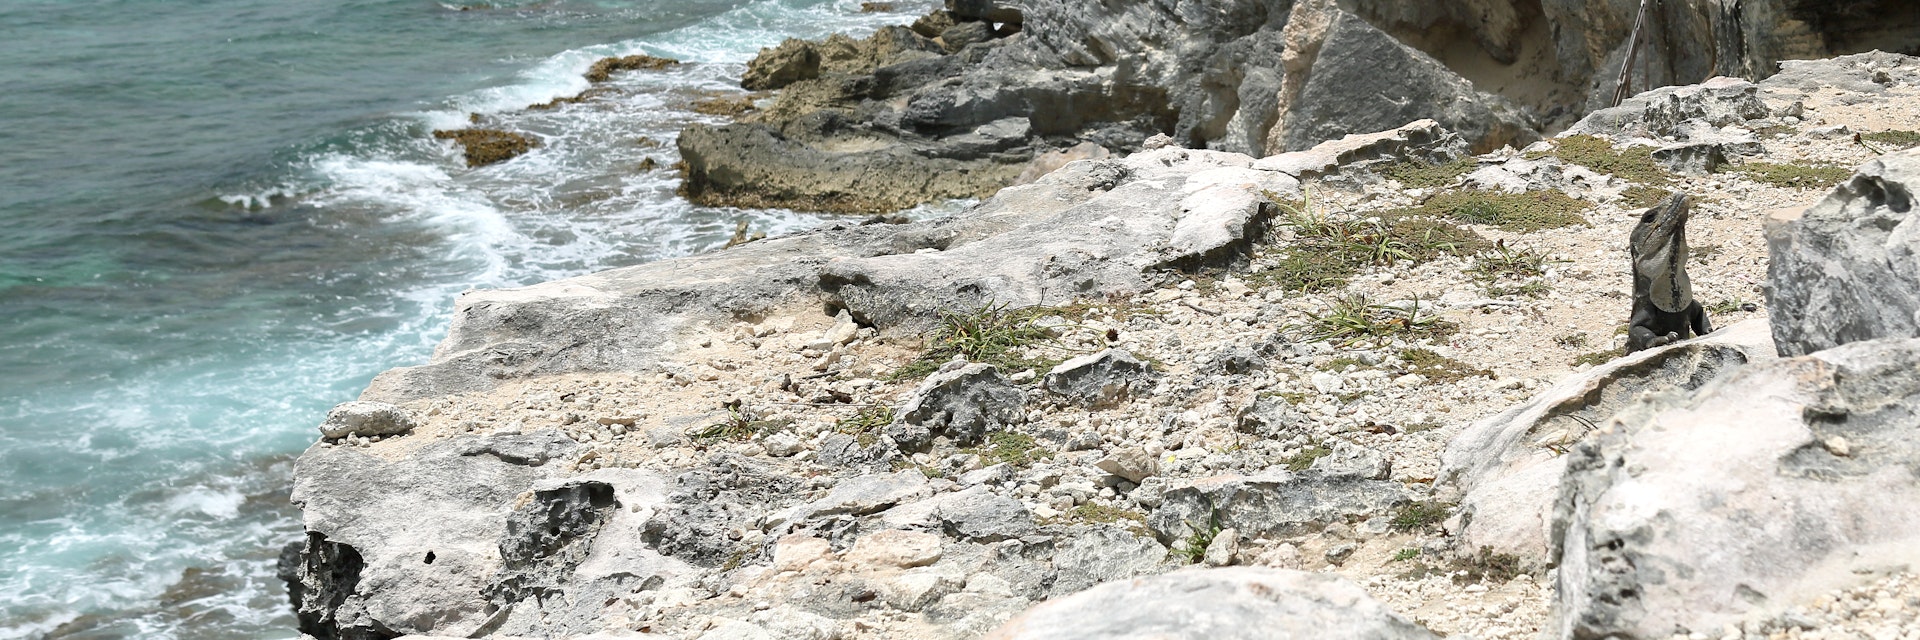 Iguanas at Punta Sur on Isla Mujeres, Quintana Roo